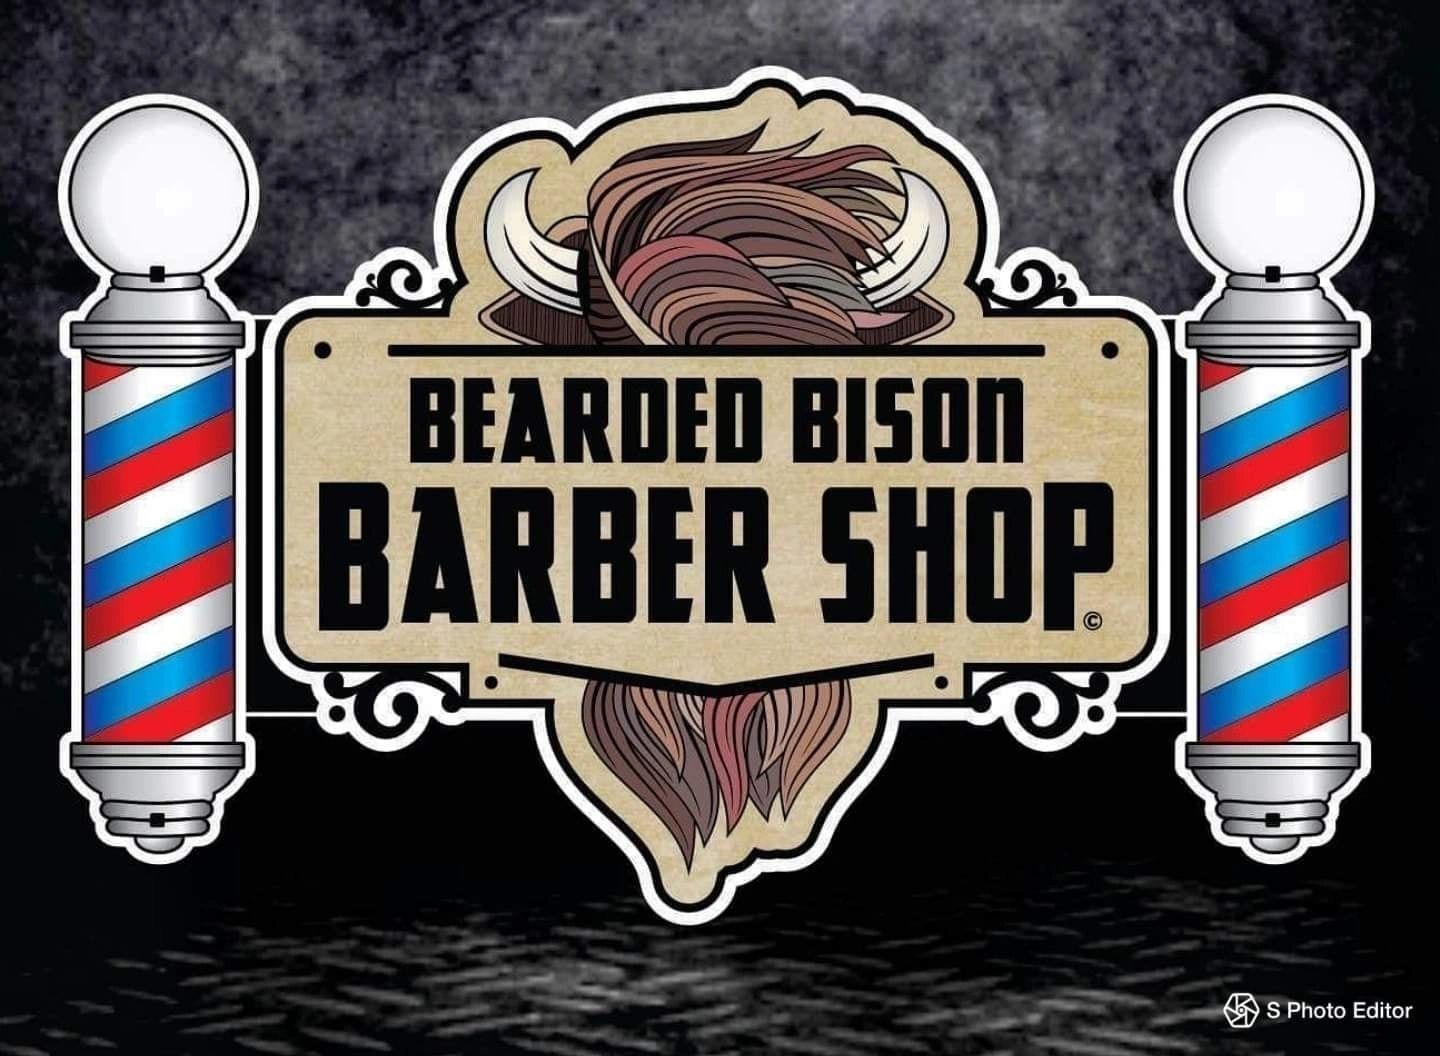 Bearded Bison Barber Shop Arcade, NY. Location #1 563 W Main St, Arcade New York 14009